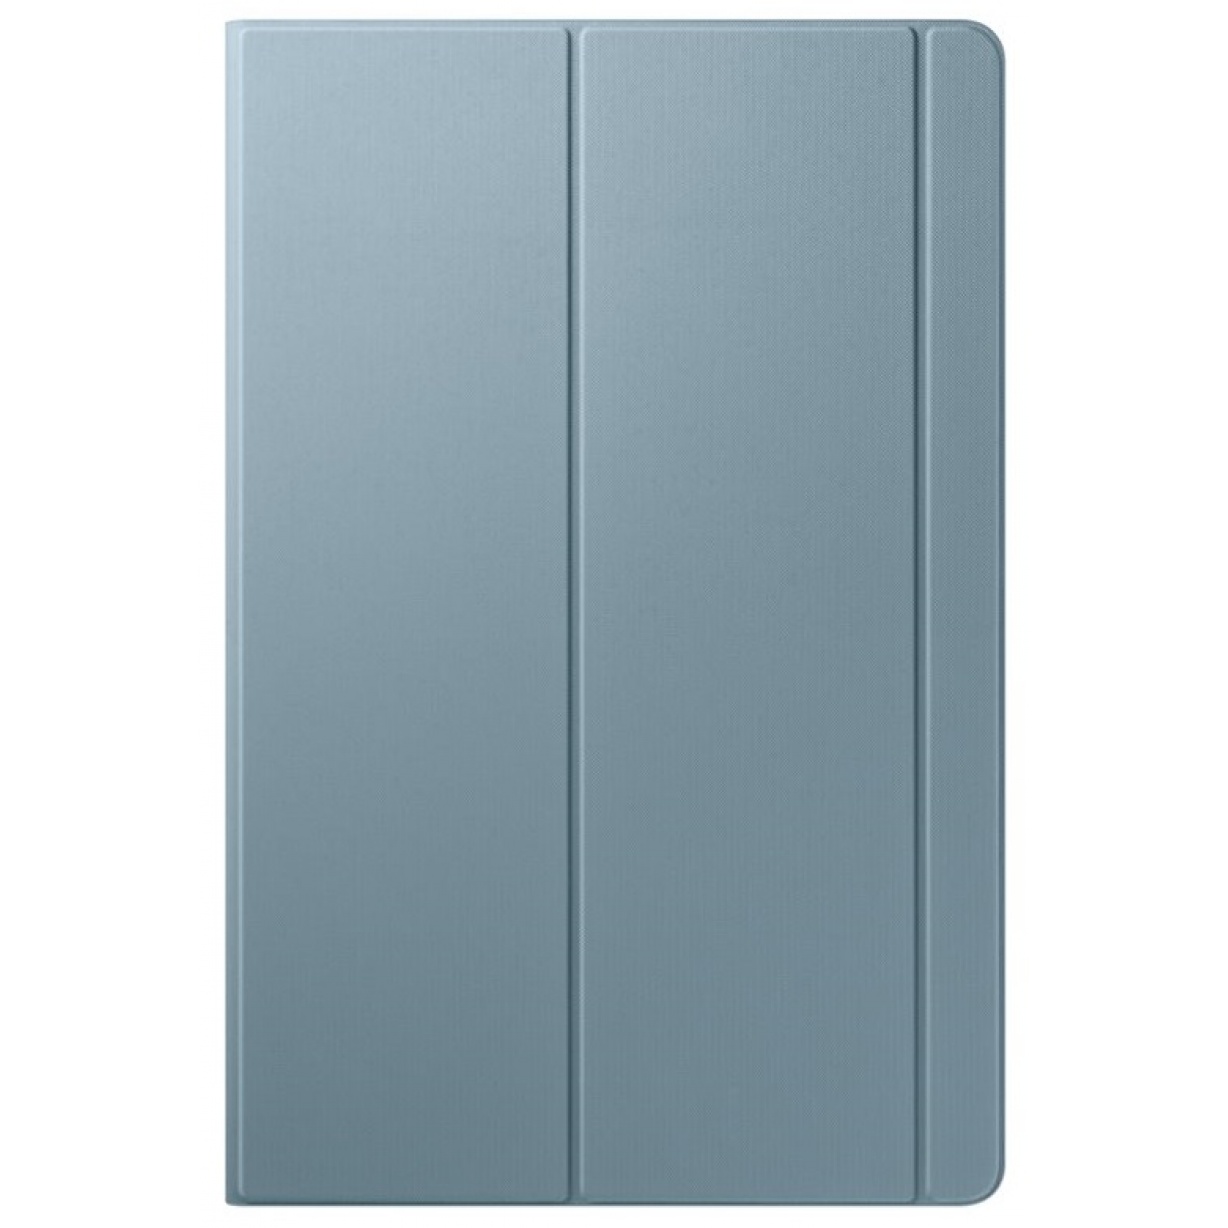 Dėklas T860 Samsung Galaxy Tab S6 10.5" Book cover Mėlynas